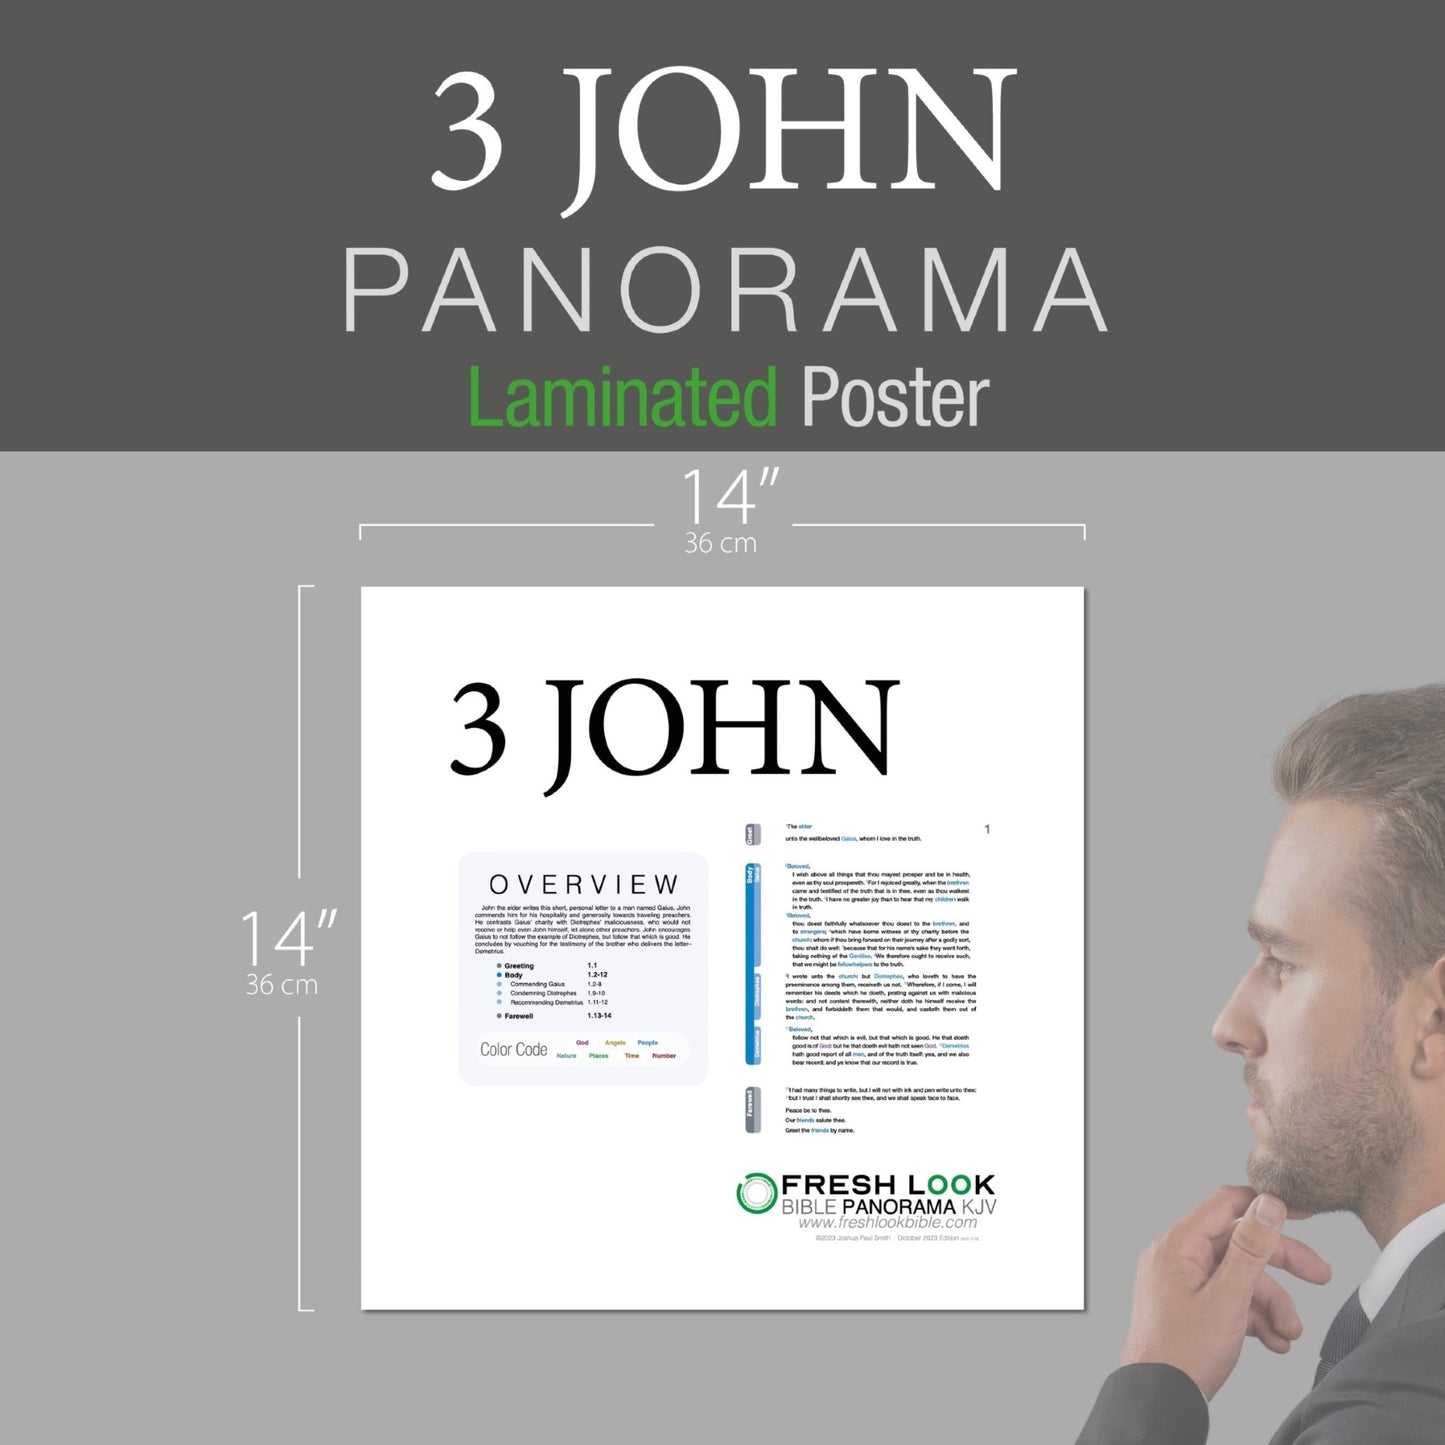 3 John Panorama Laminated